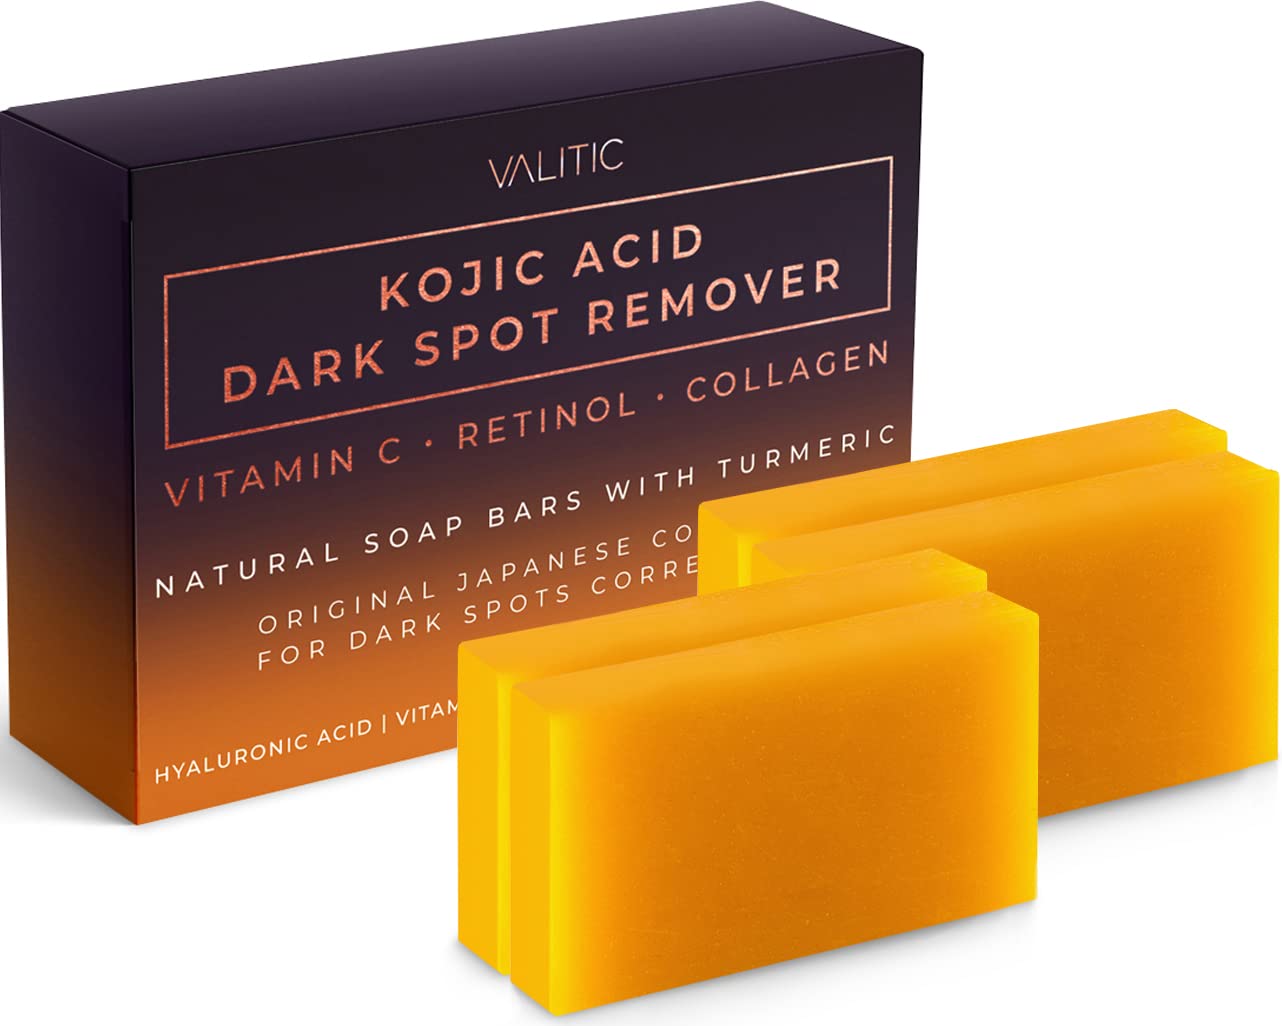 VALITIc Kojic Acid Dark Spot Remover Soap Bars with Vitamin c, Retinol, collagen, Turmeric - Original Japanese complex Infused w